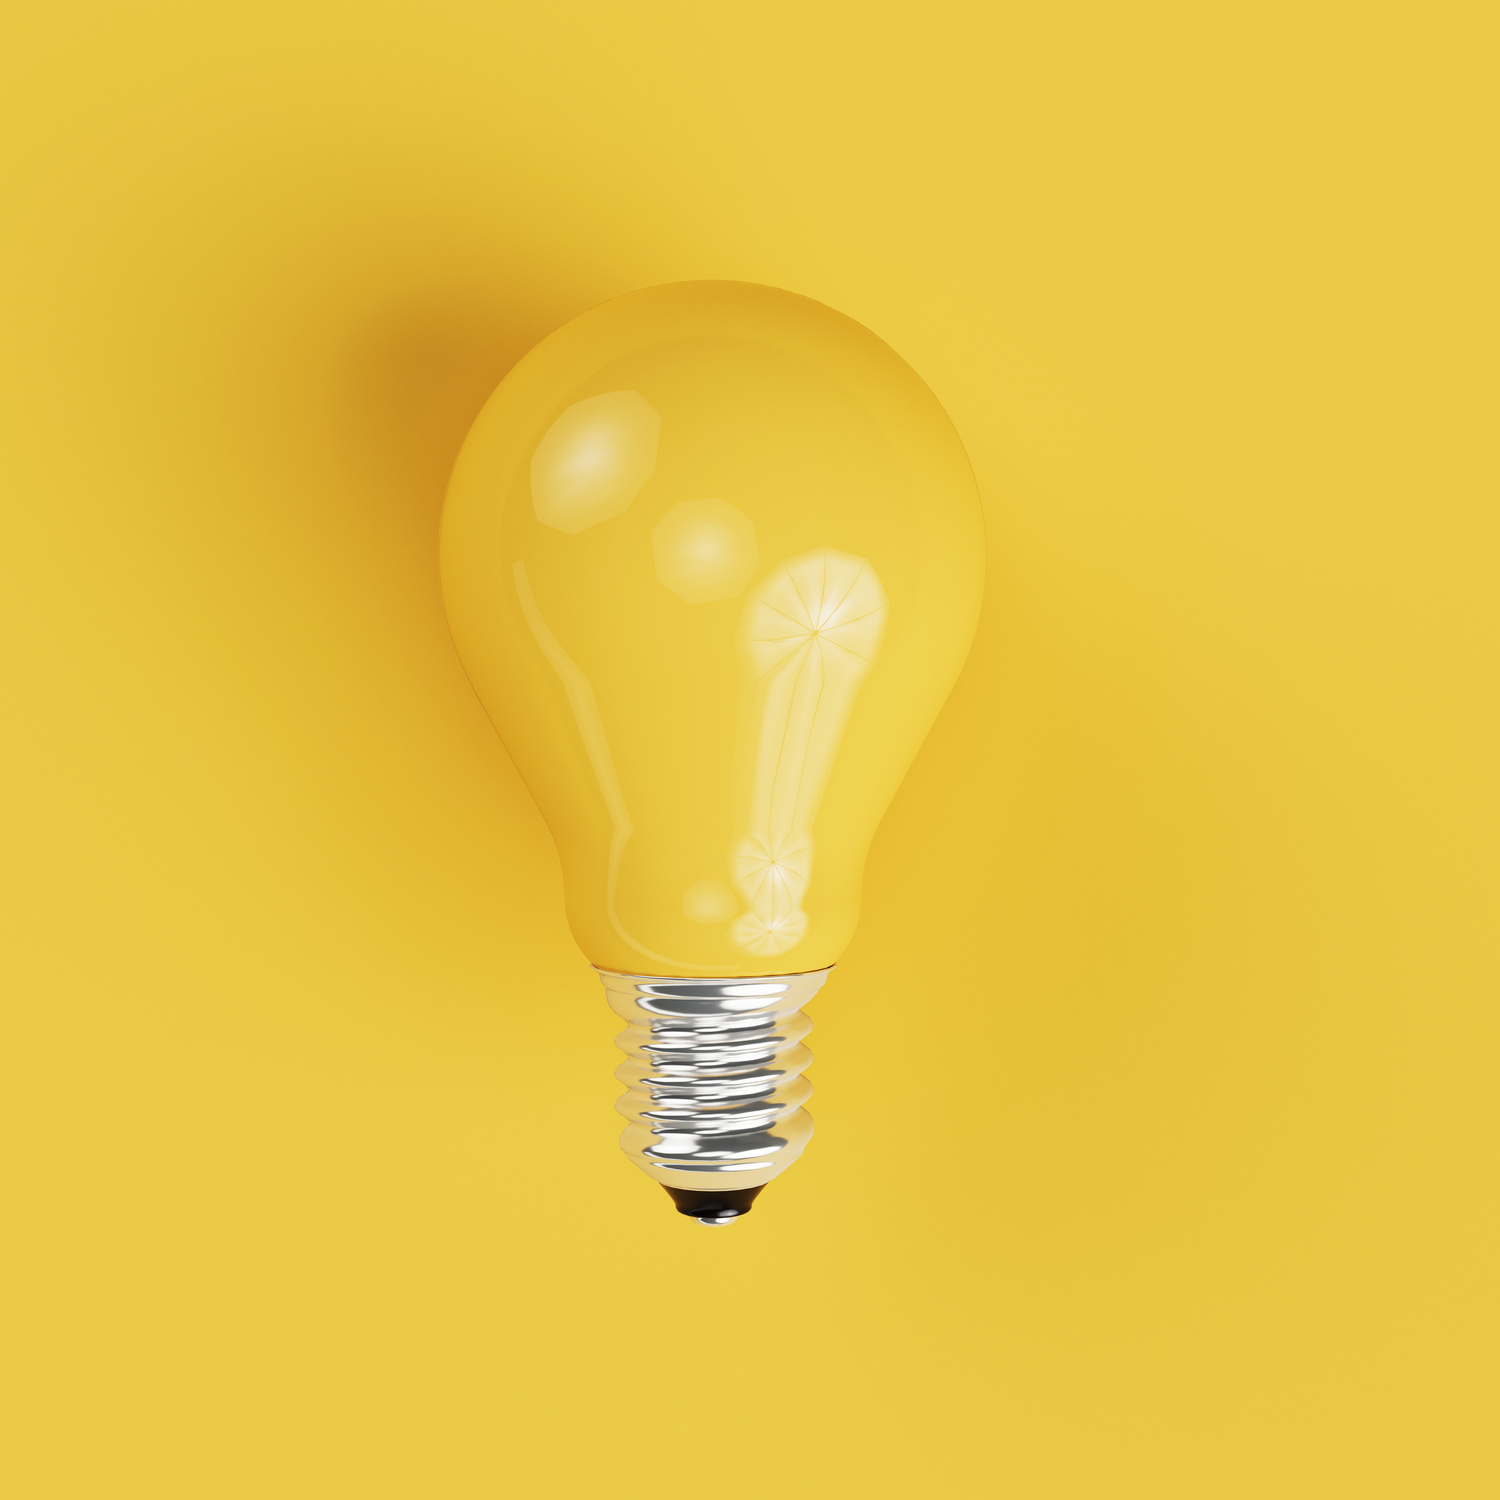 Yellow Light bulb on yellow background.